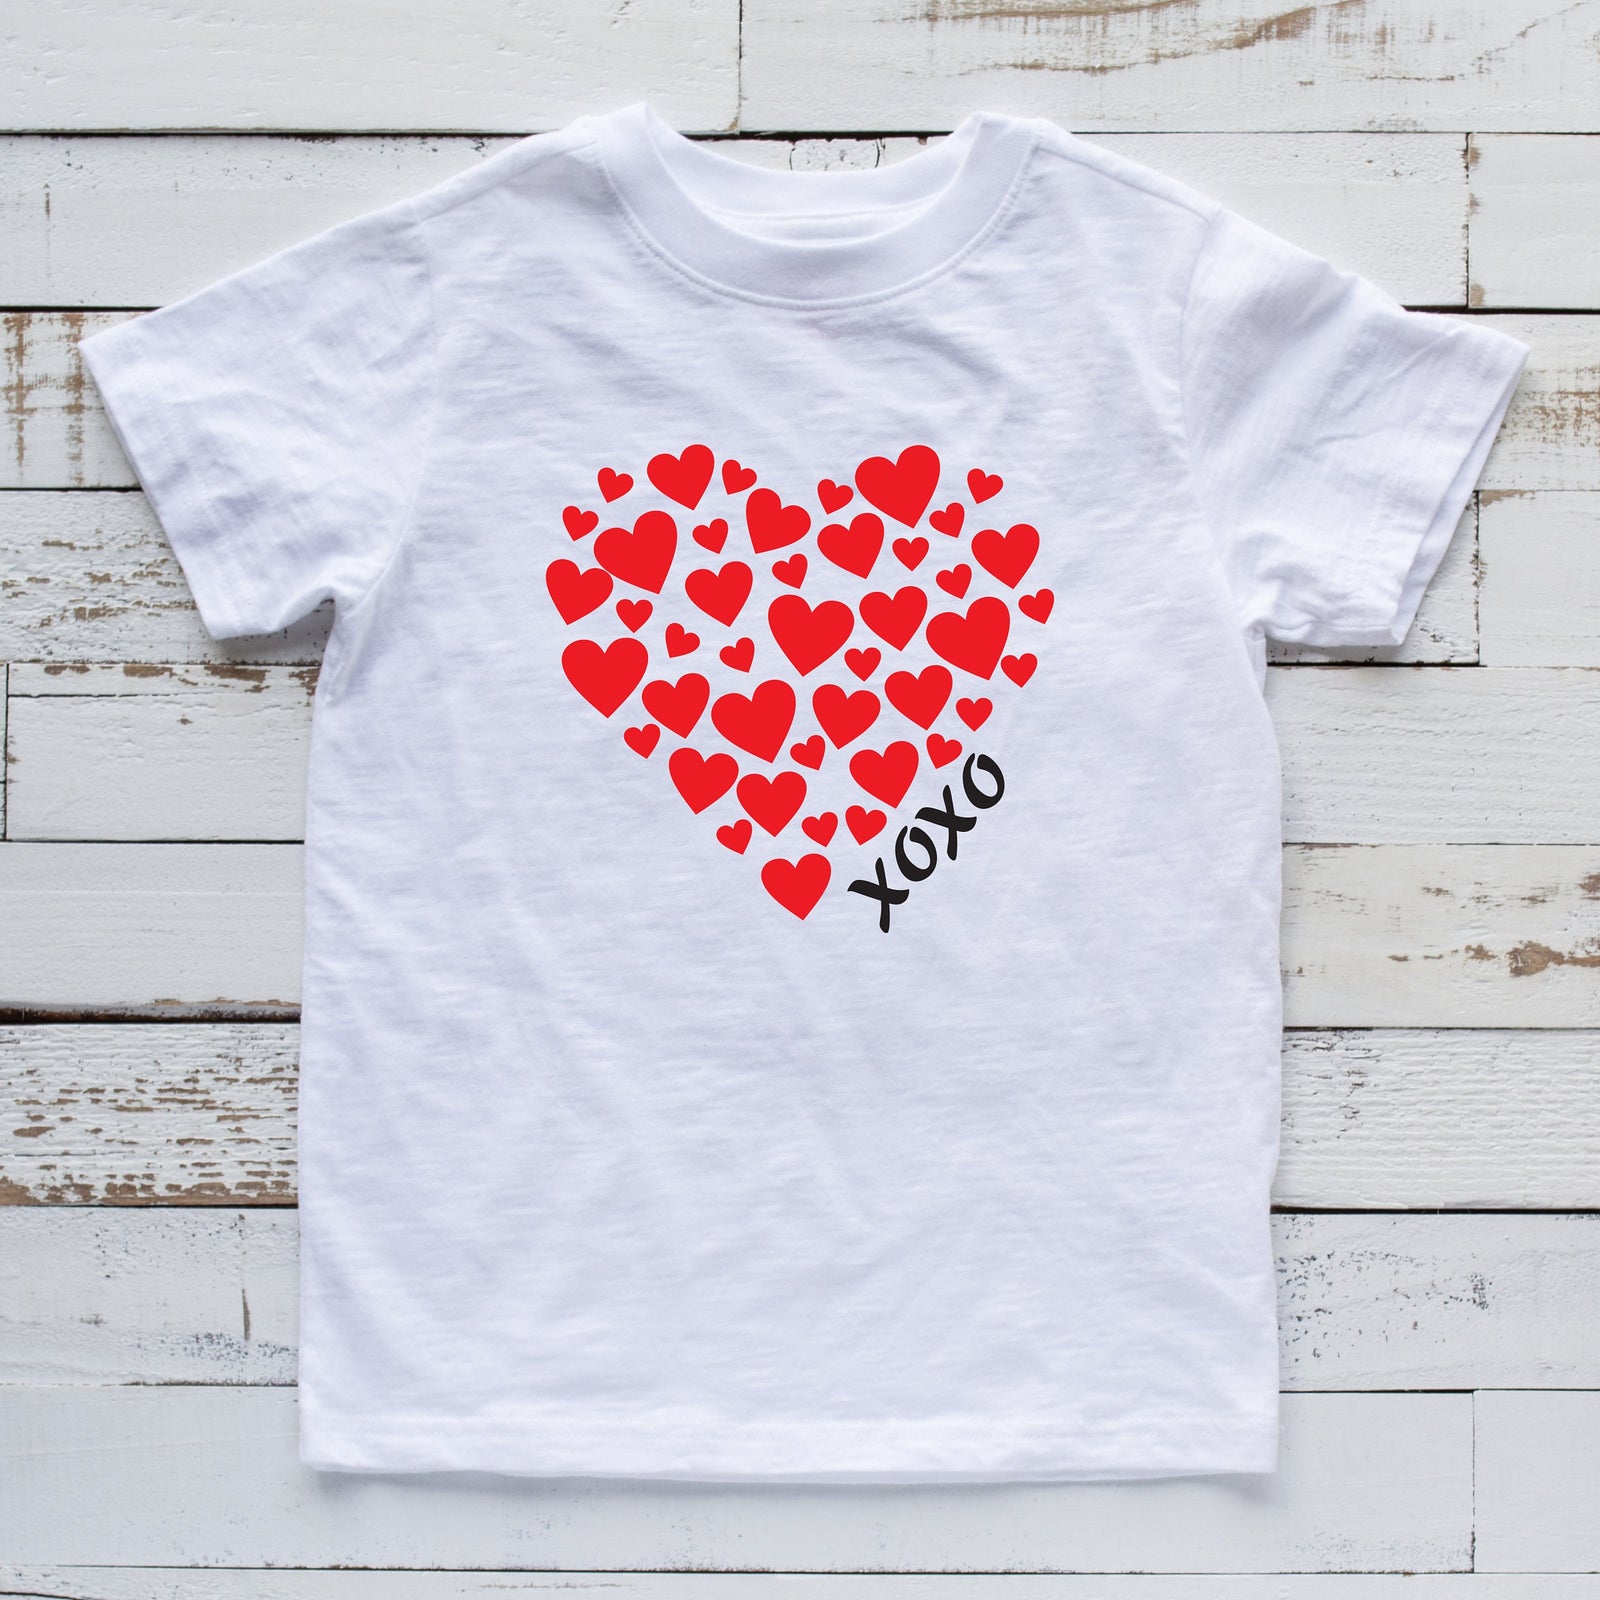 Hearts in Heart Shape T Shirt - Valentine Shirt - Love T Shirt - XOXO - Hugs and Kisses